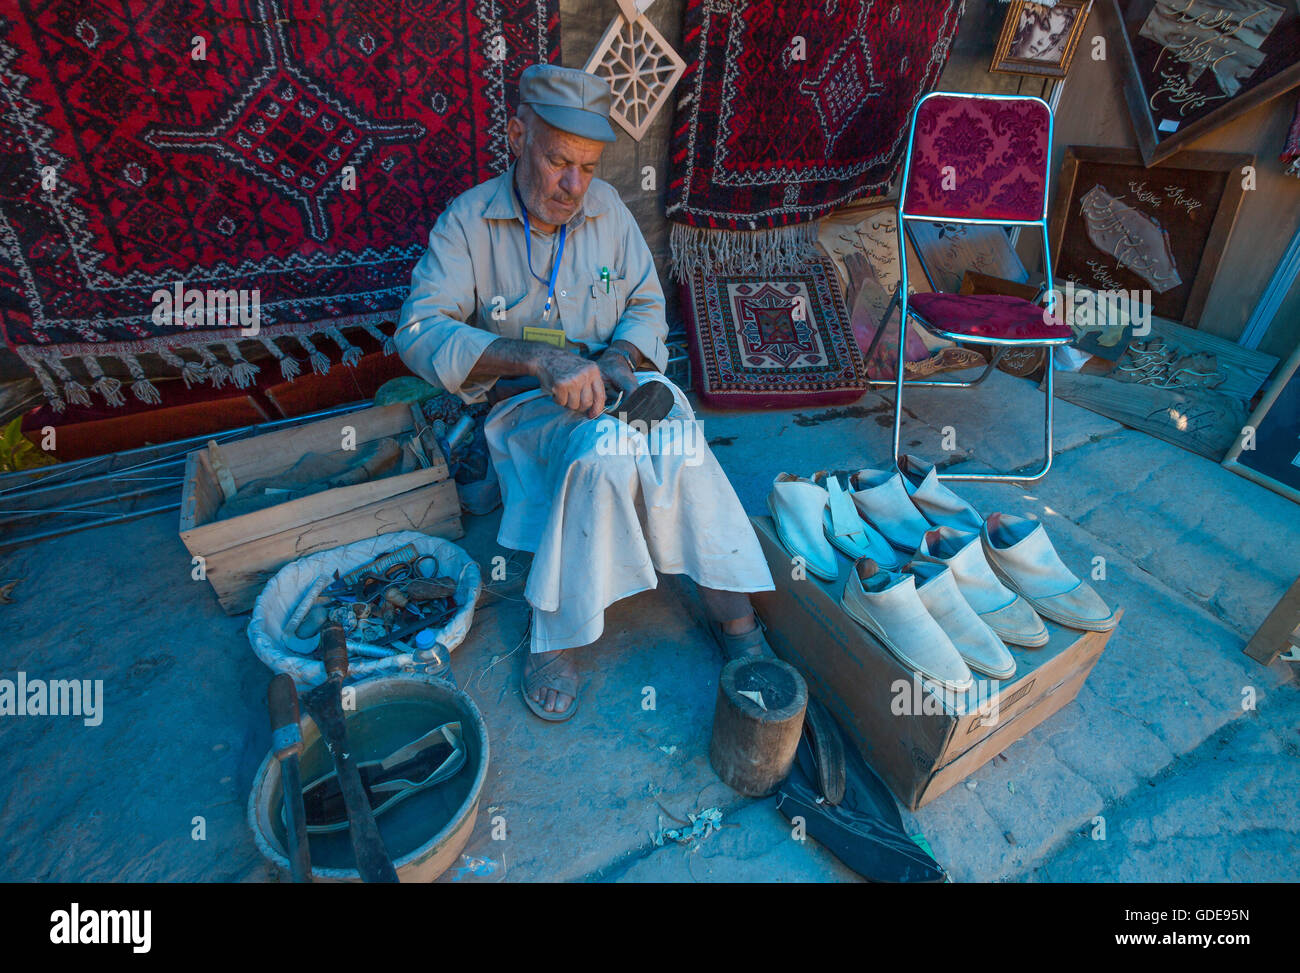 Iran,Shiraz City,Arg-e Karim Khan Citadel,inside the citadel,shoe maker Stock Photo